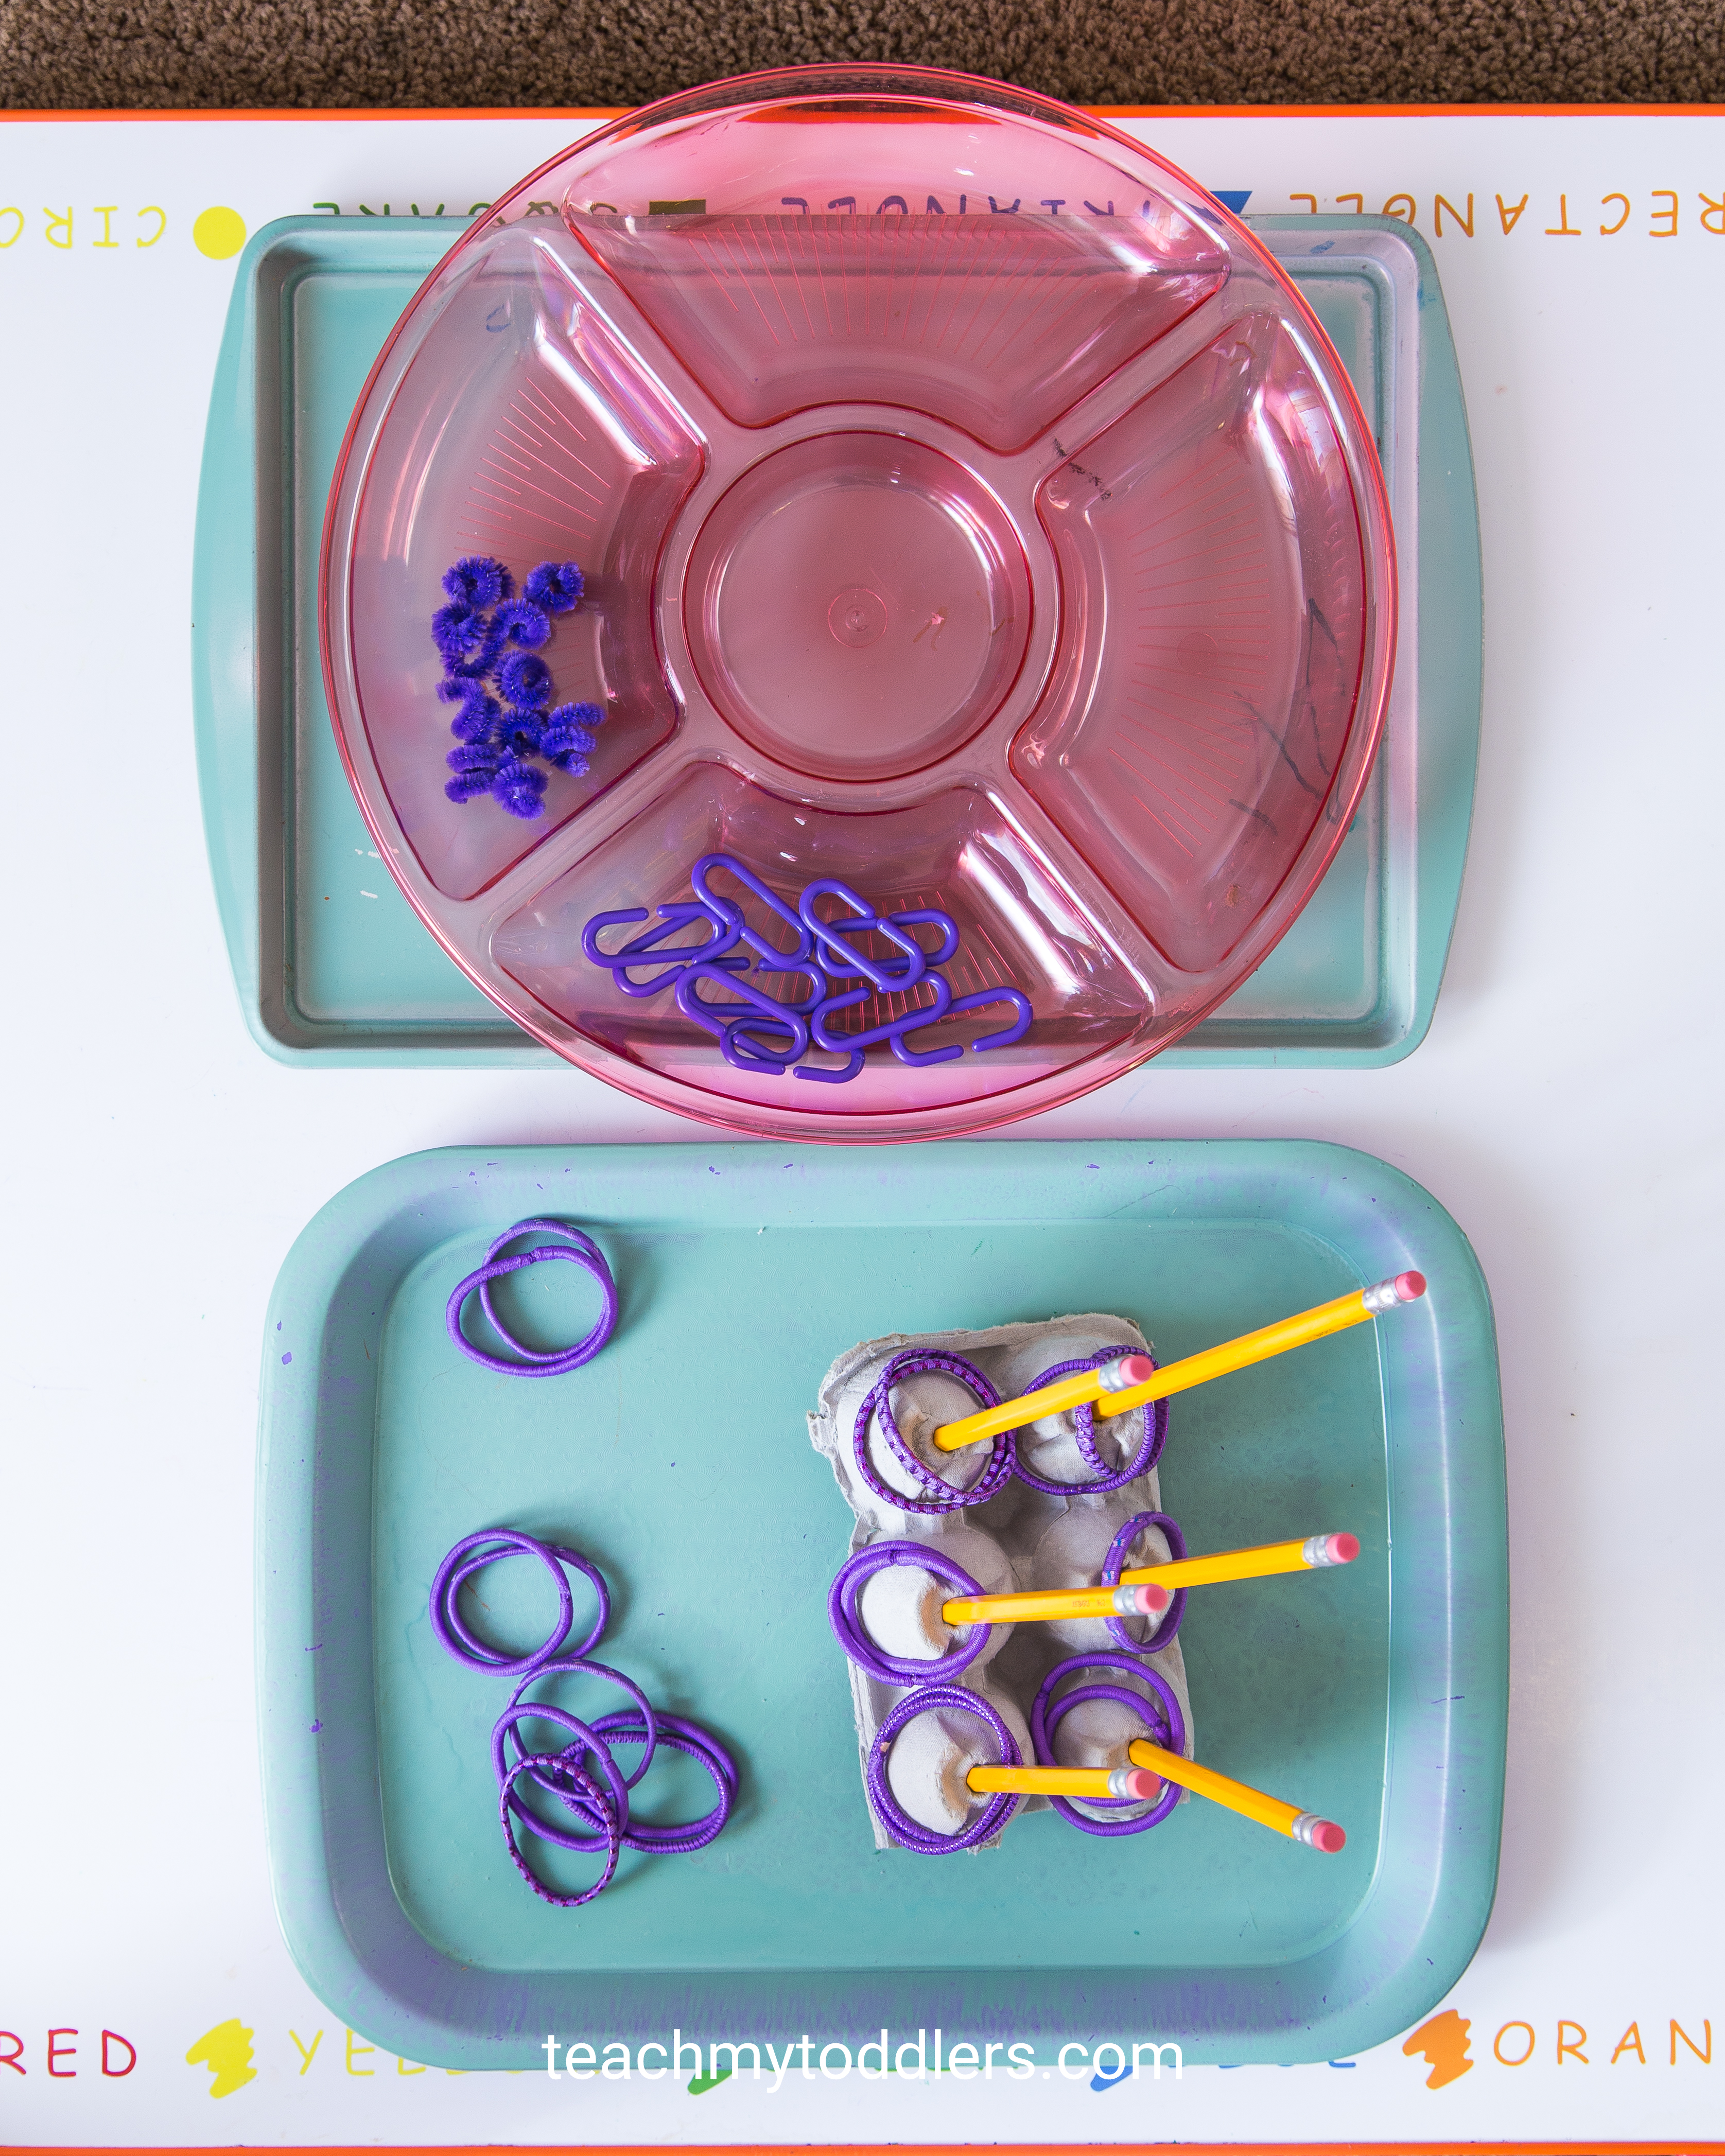 A fun idea to teach your toddler the color purple